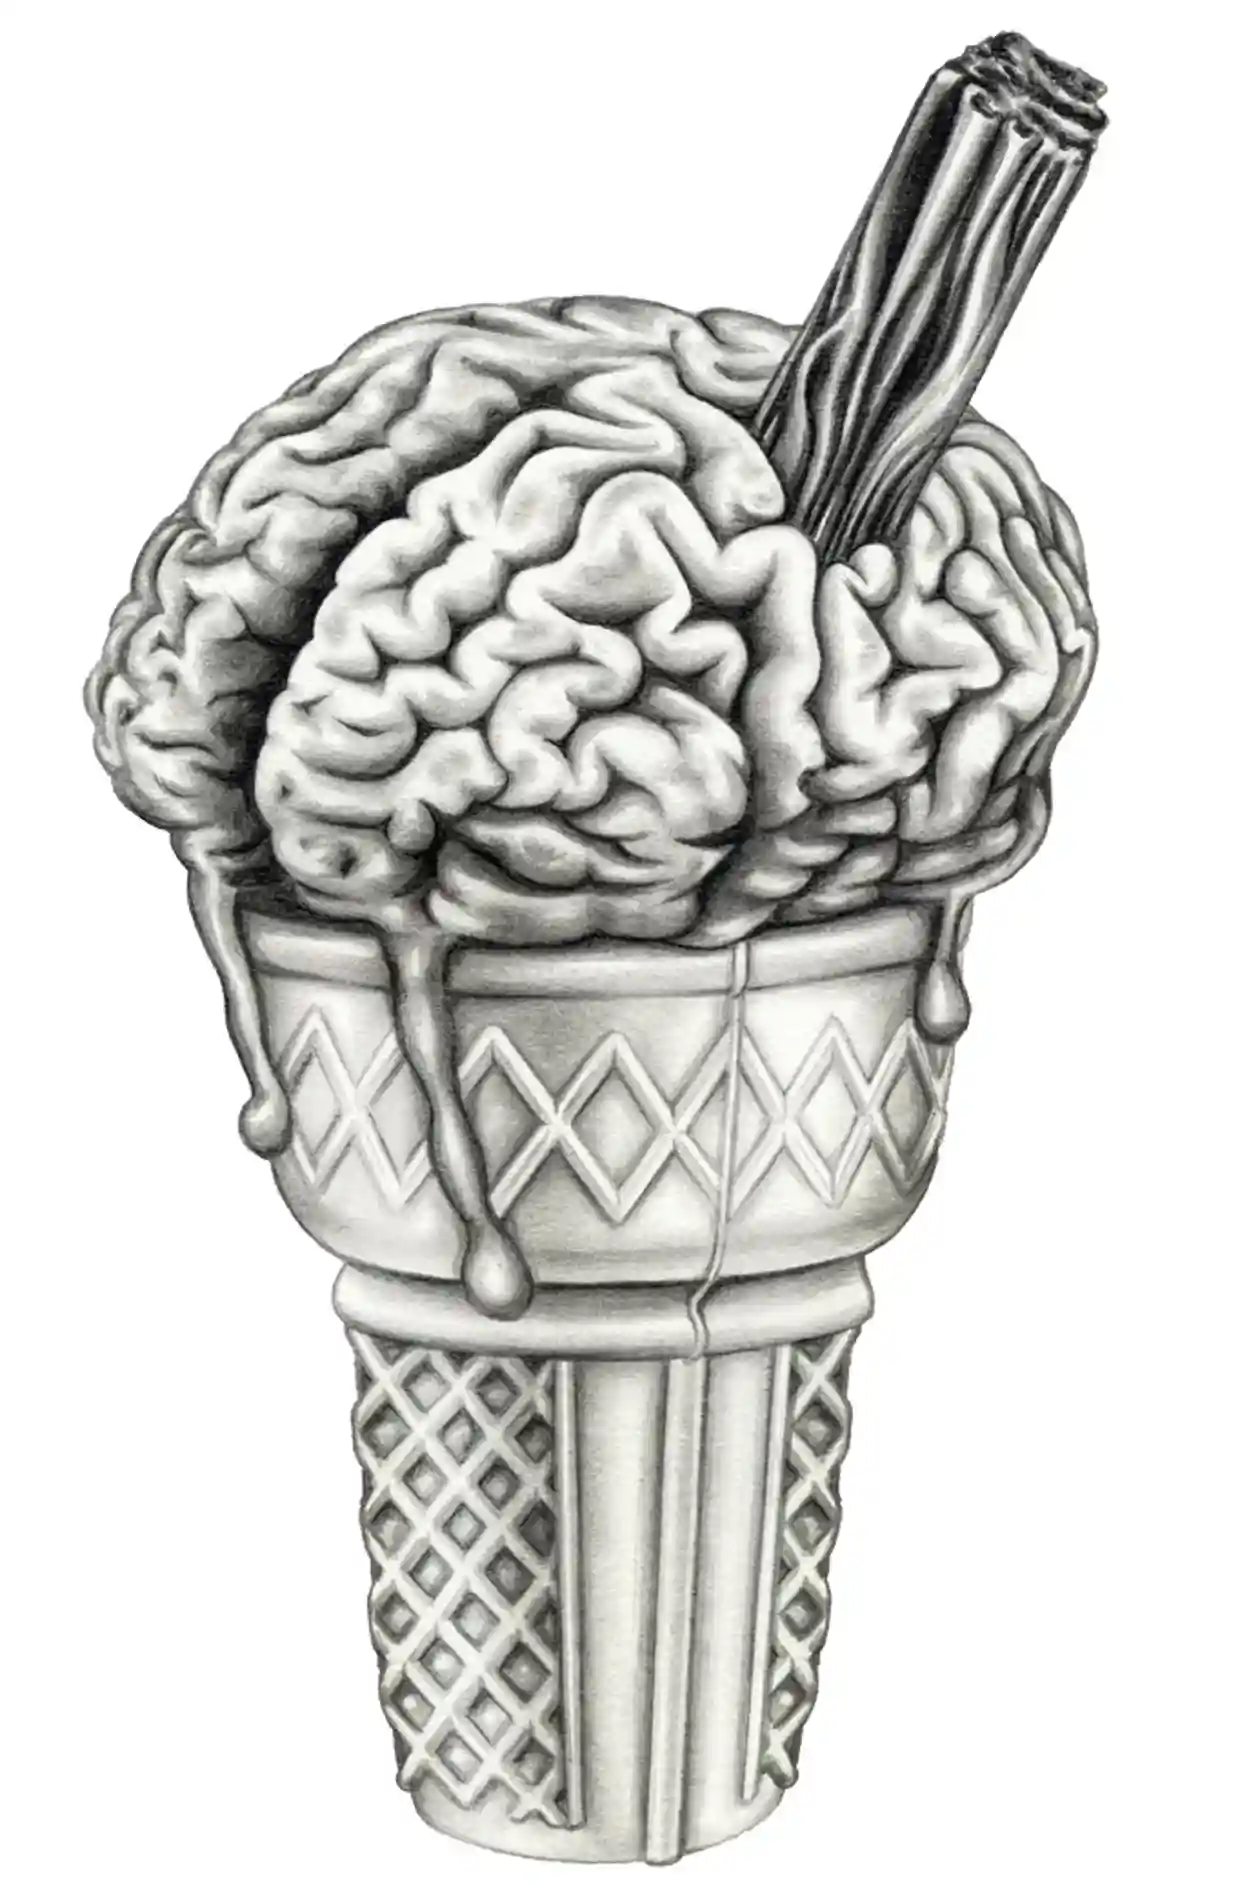 illustration - the brain freeze